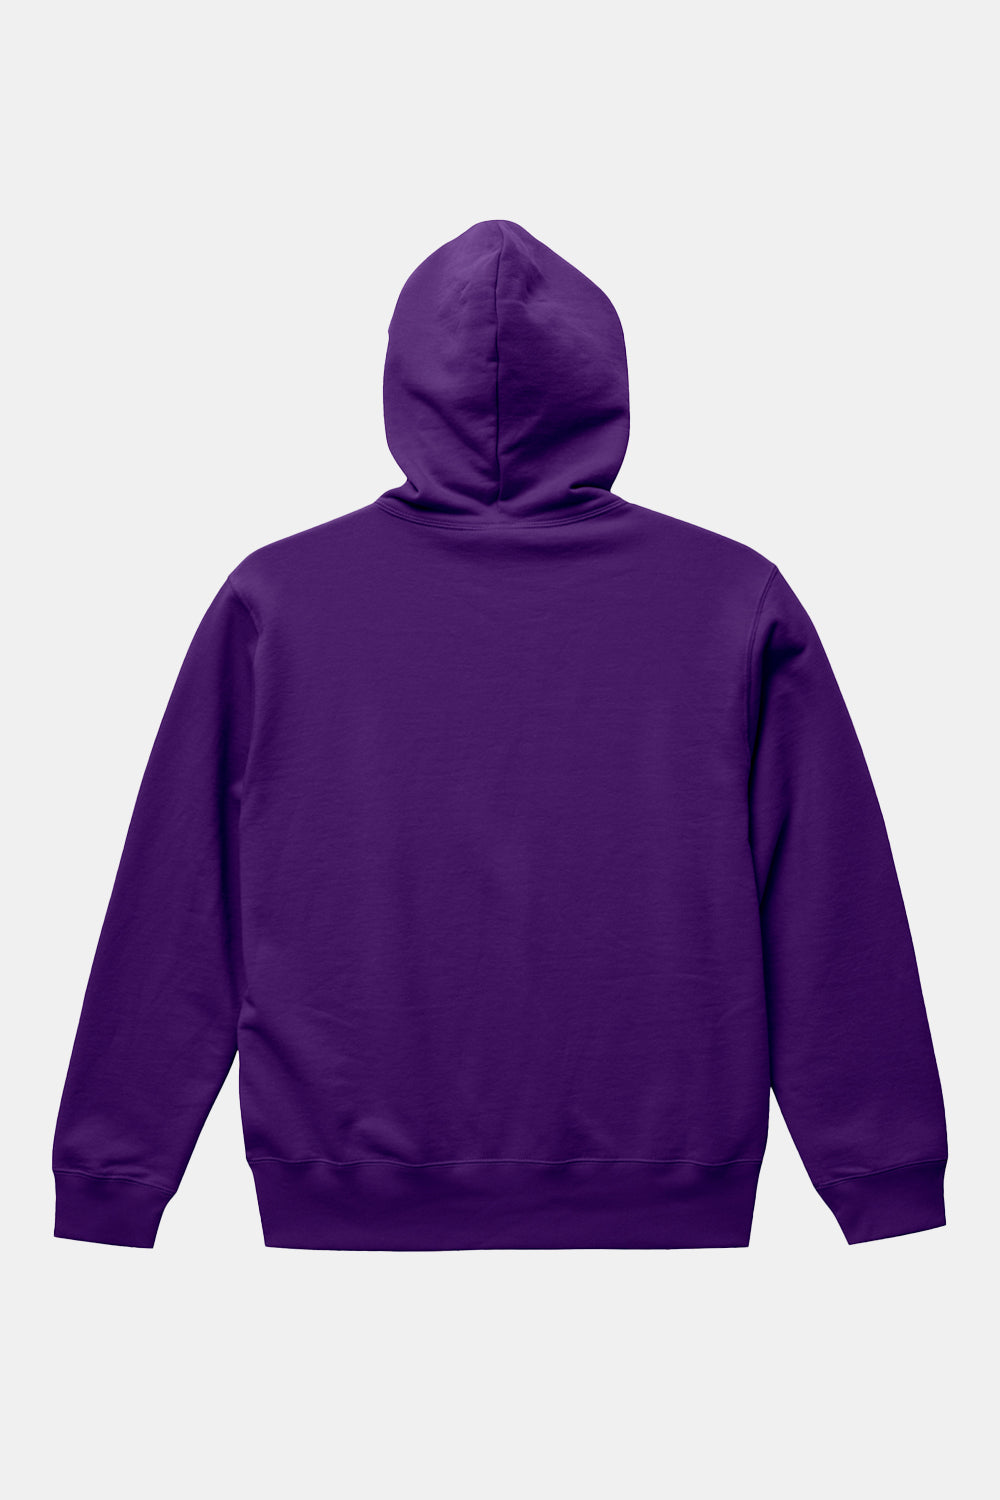 United Athle 5214 10.0oz Sweat Pullover Hoodie (Purple)
